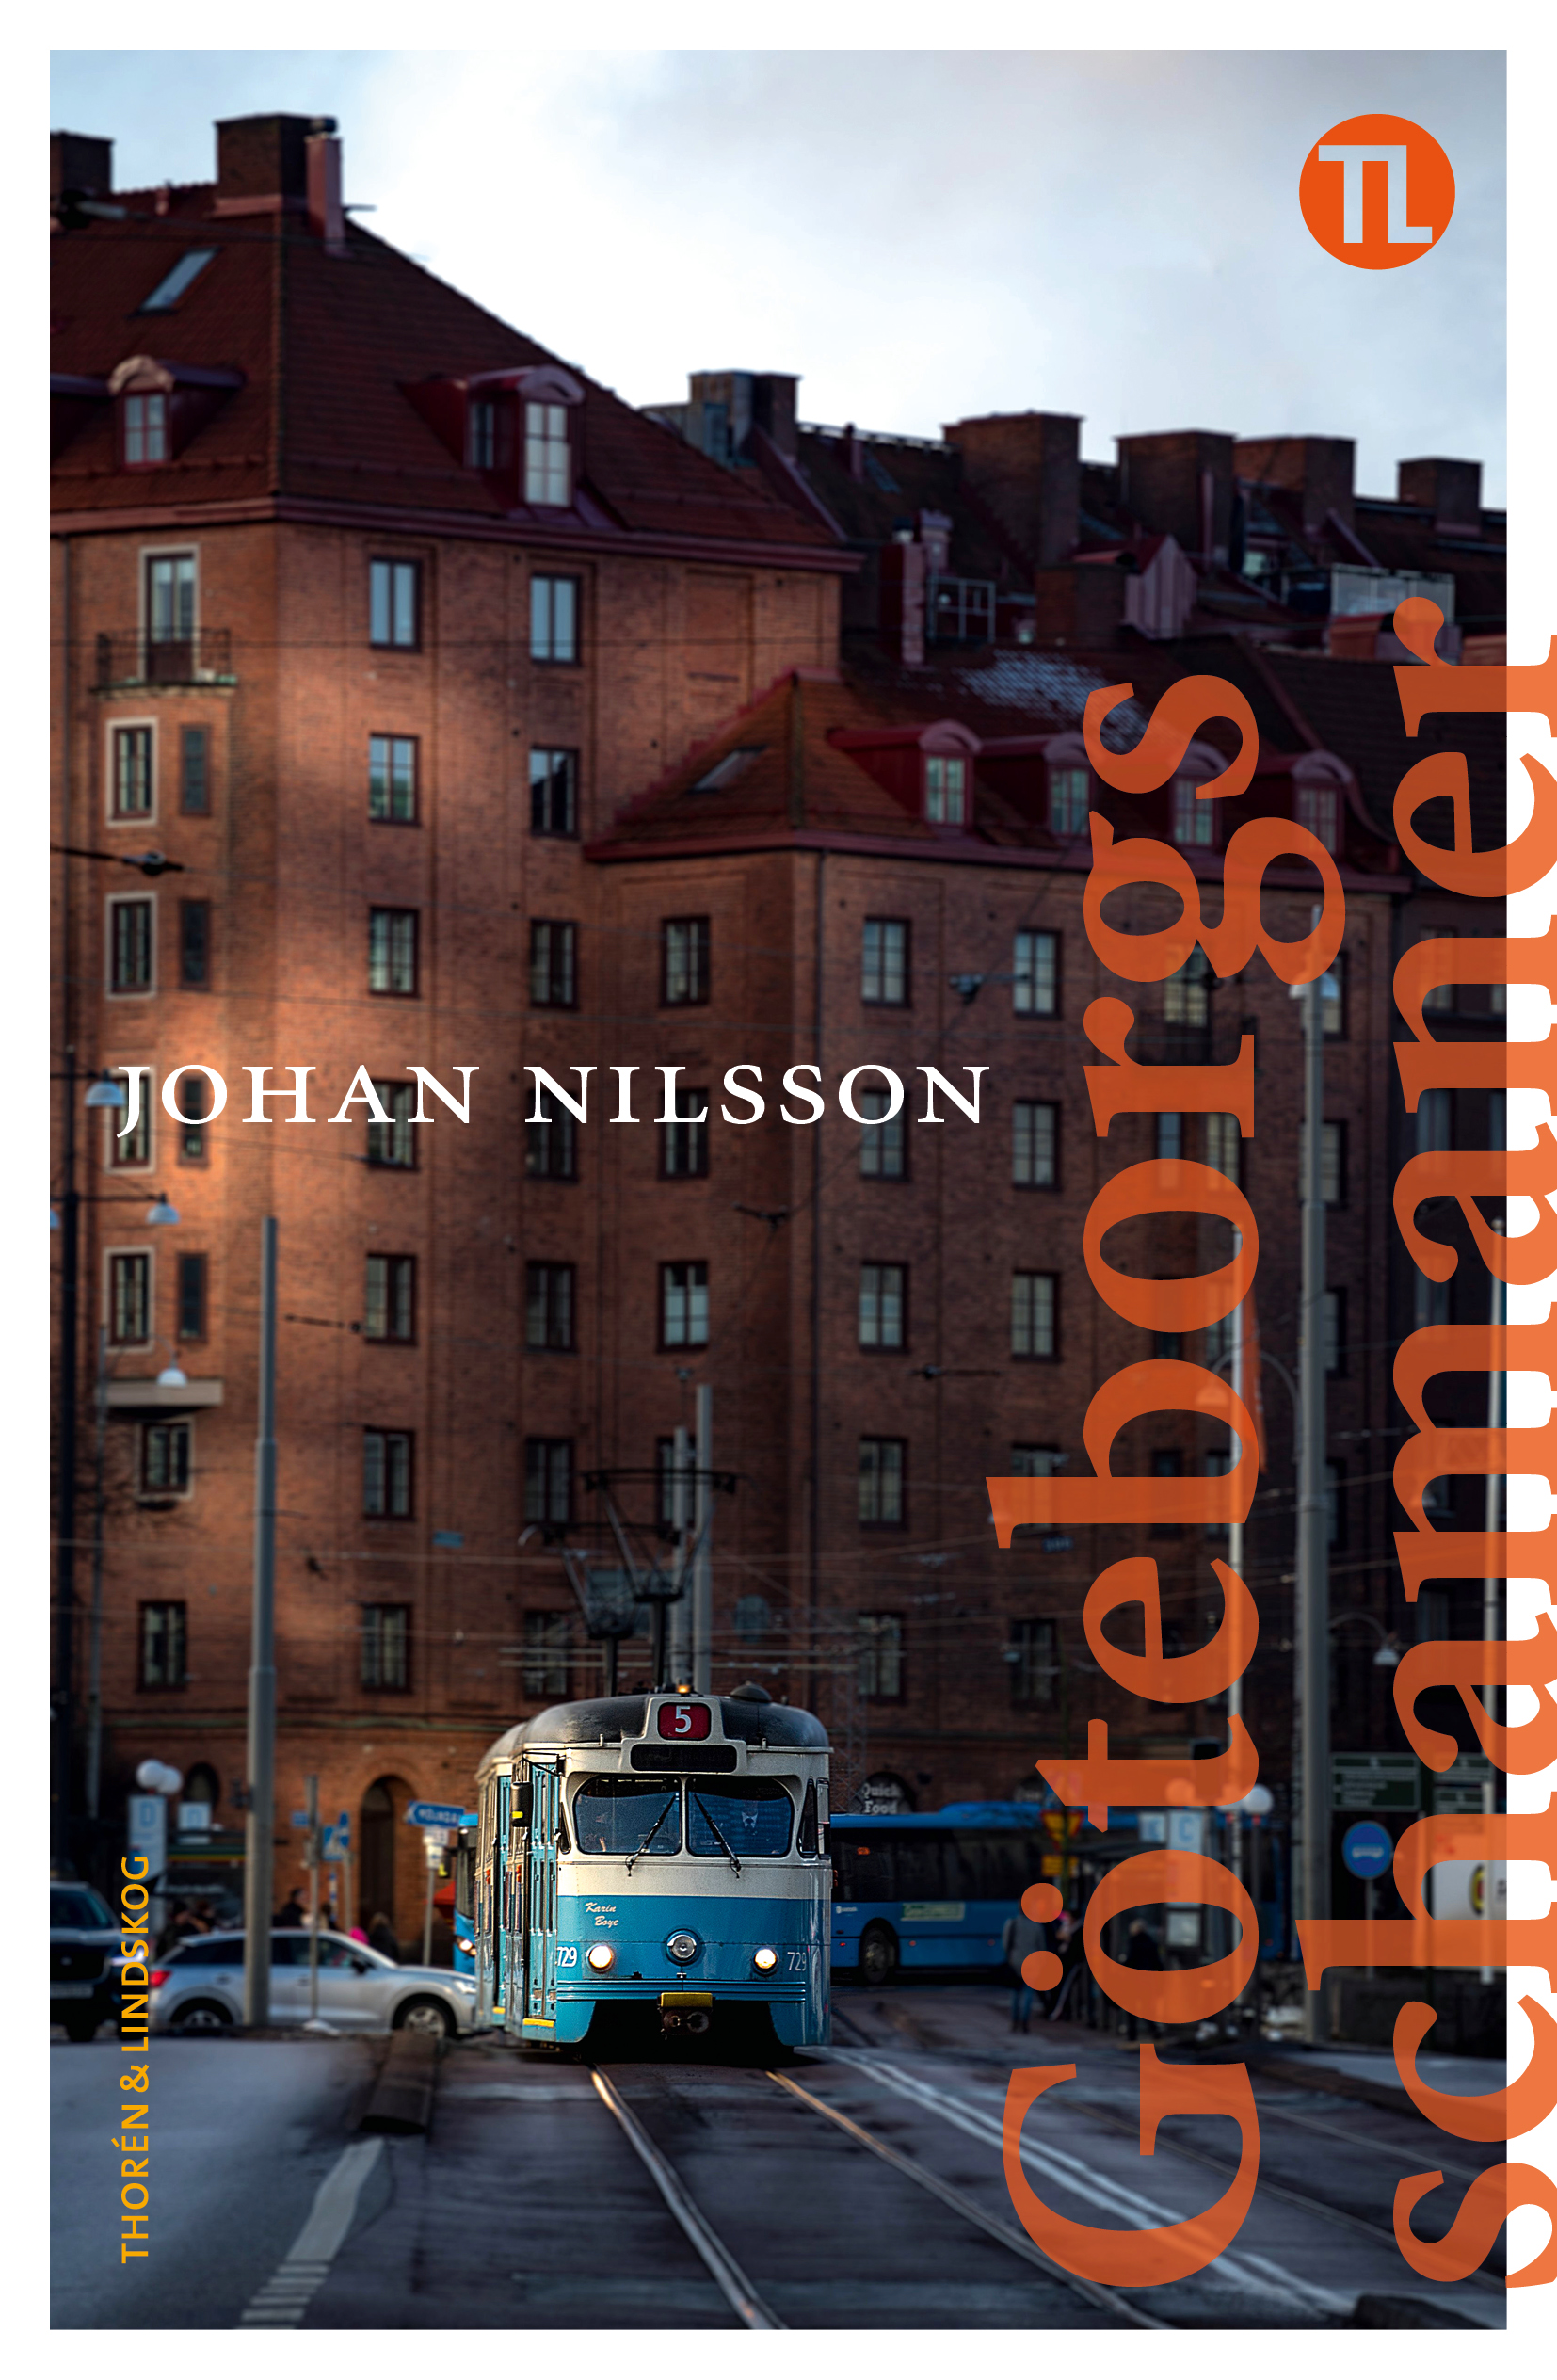 Göteborgs schamaner – Johan Nilsson